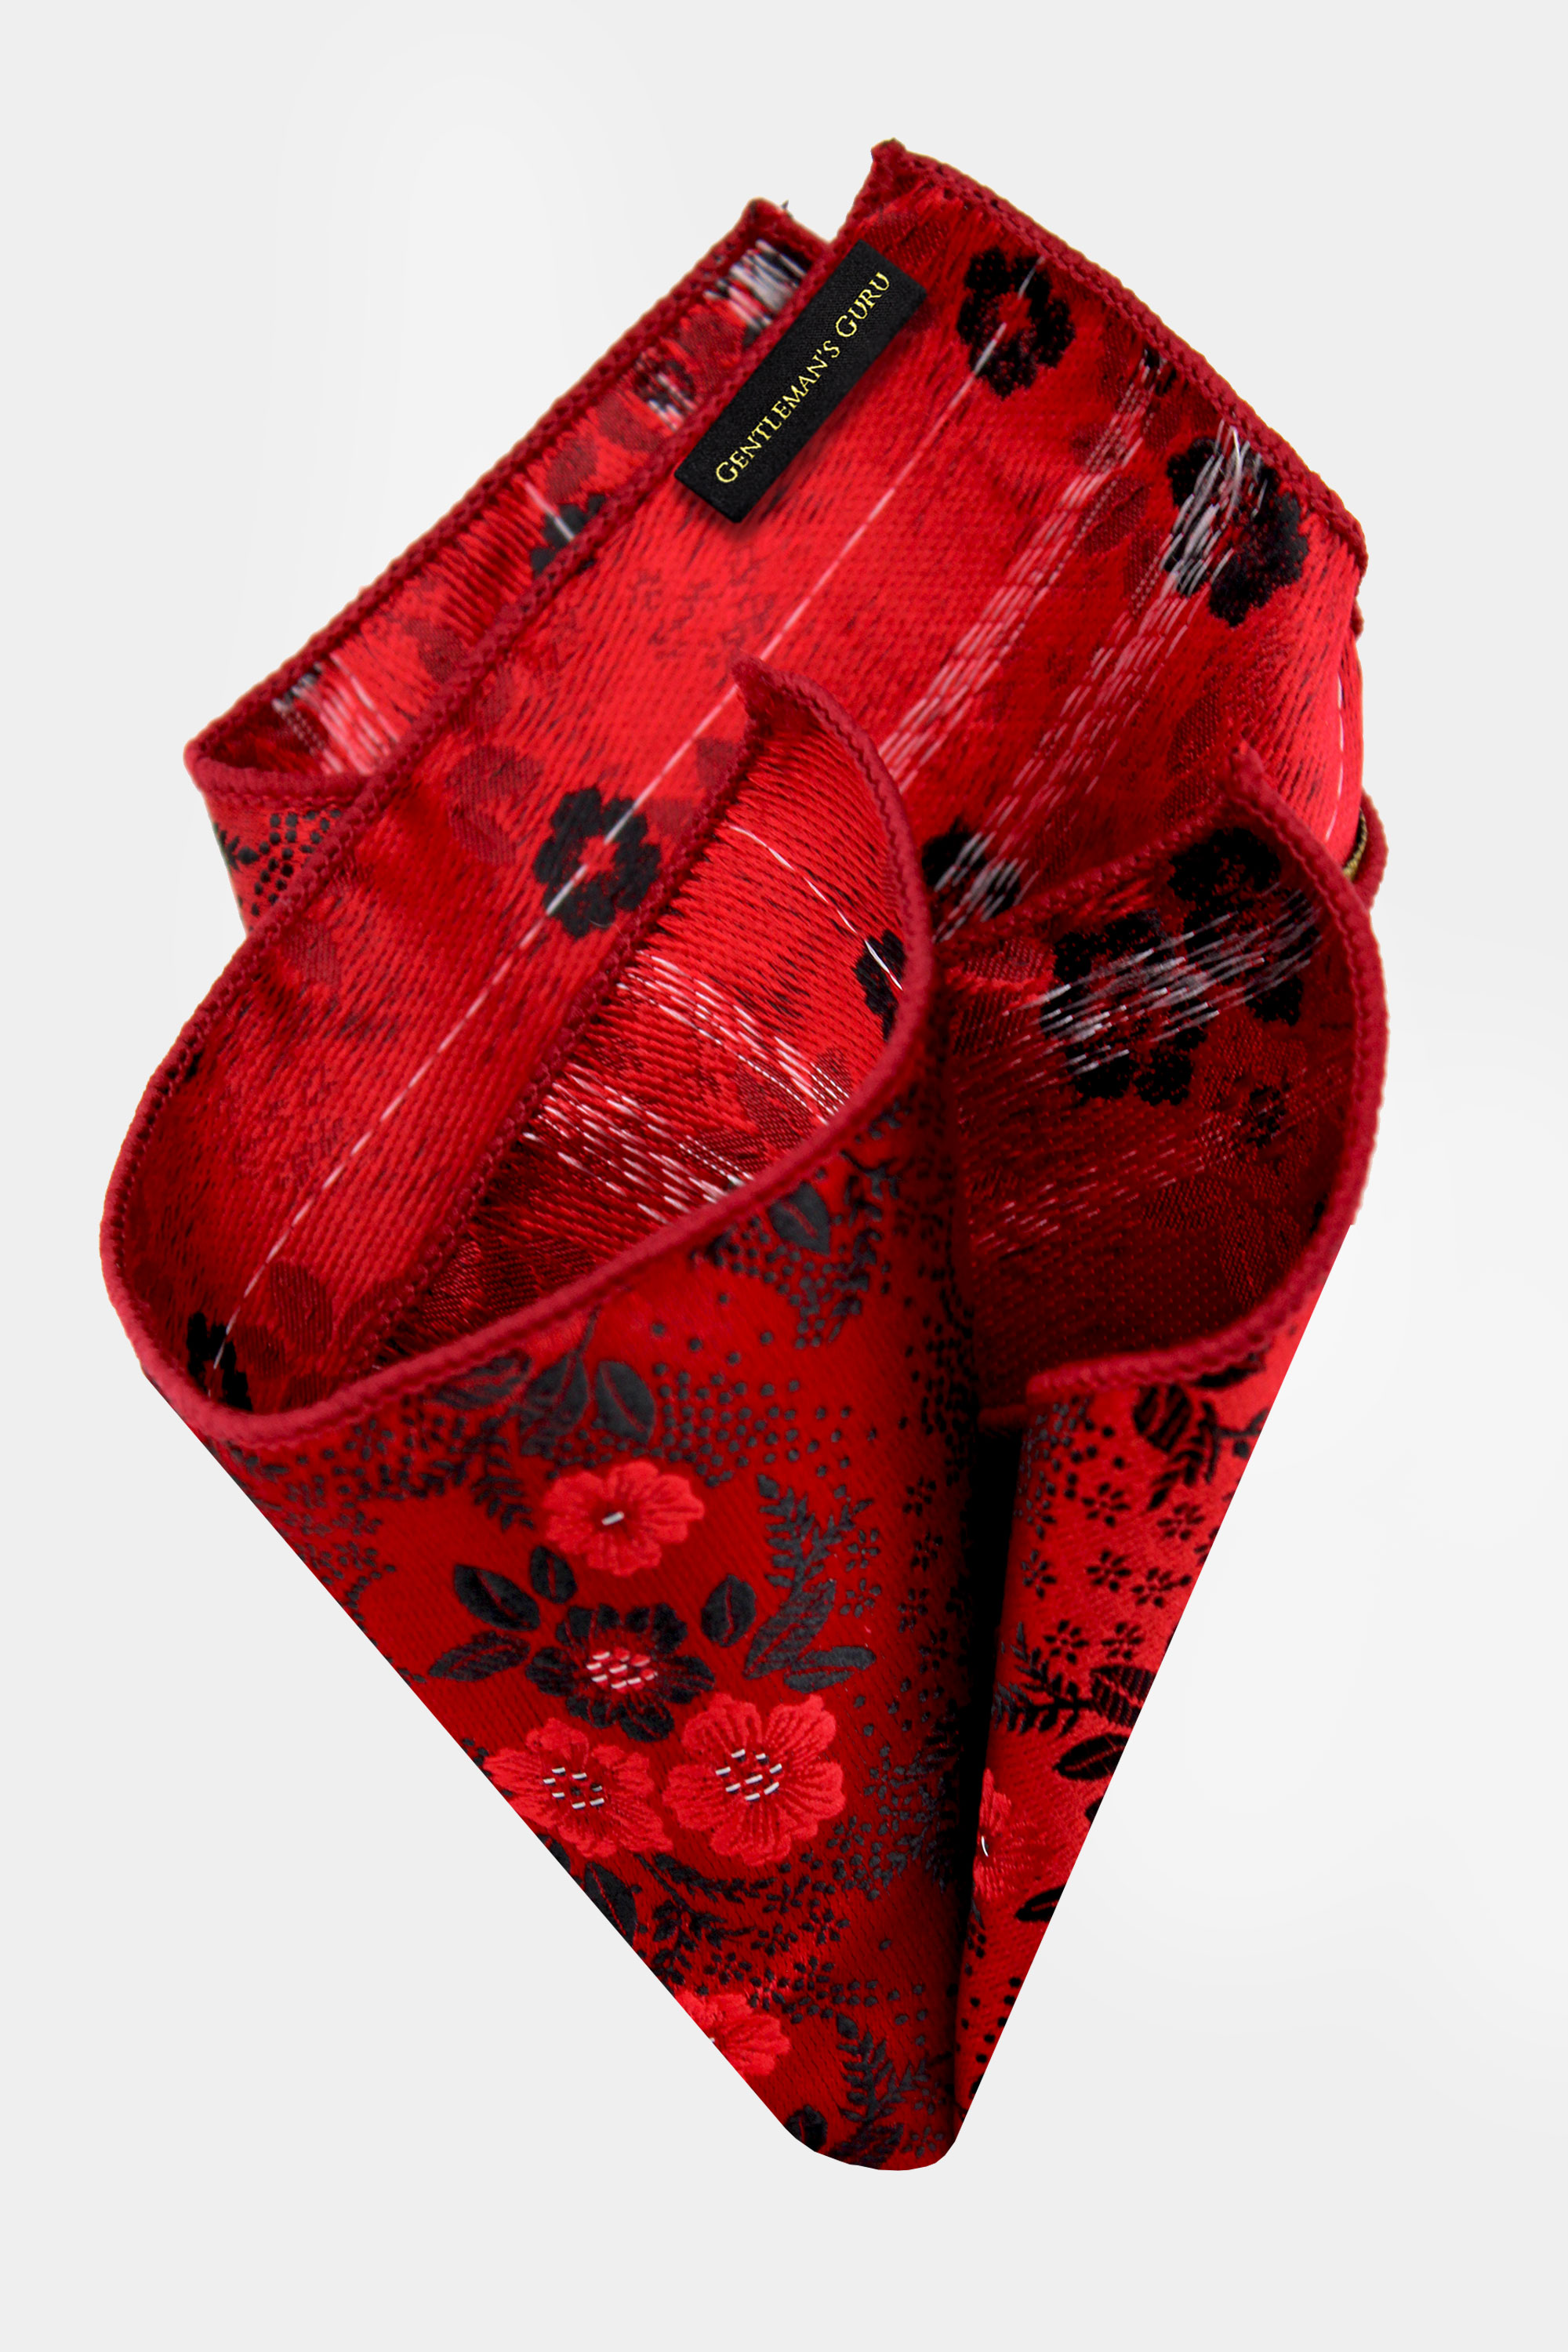 Mens-Red-Floral-Pocket-Square-Handkerchief-from-Gentlemansguru.com